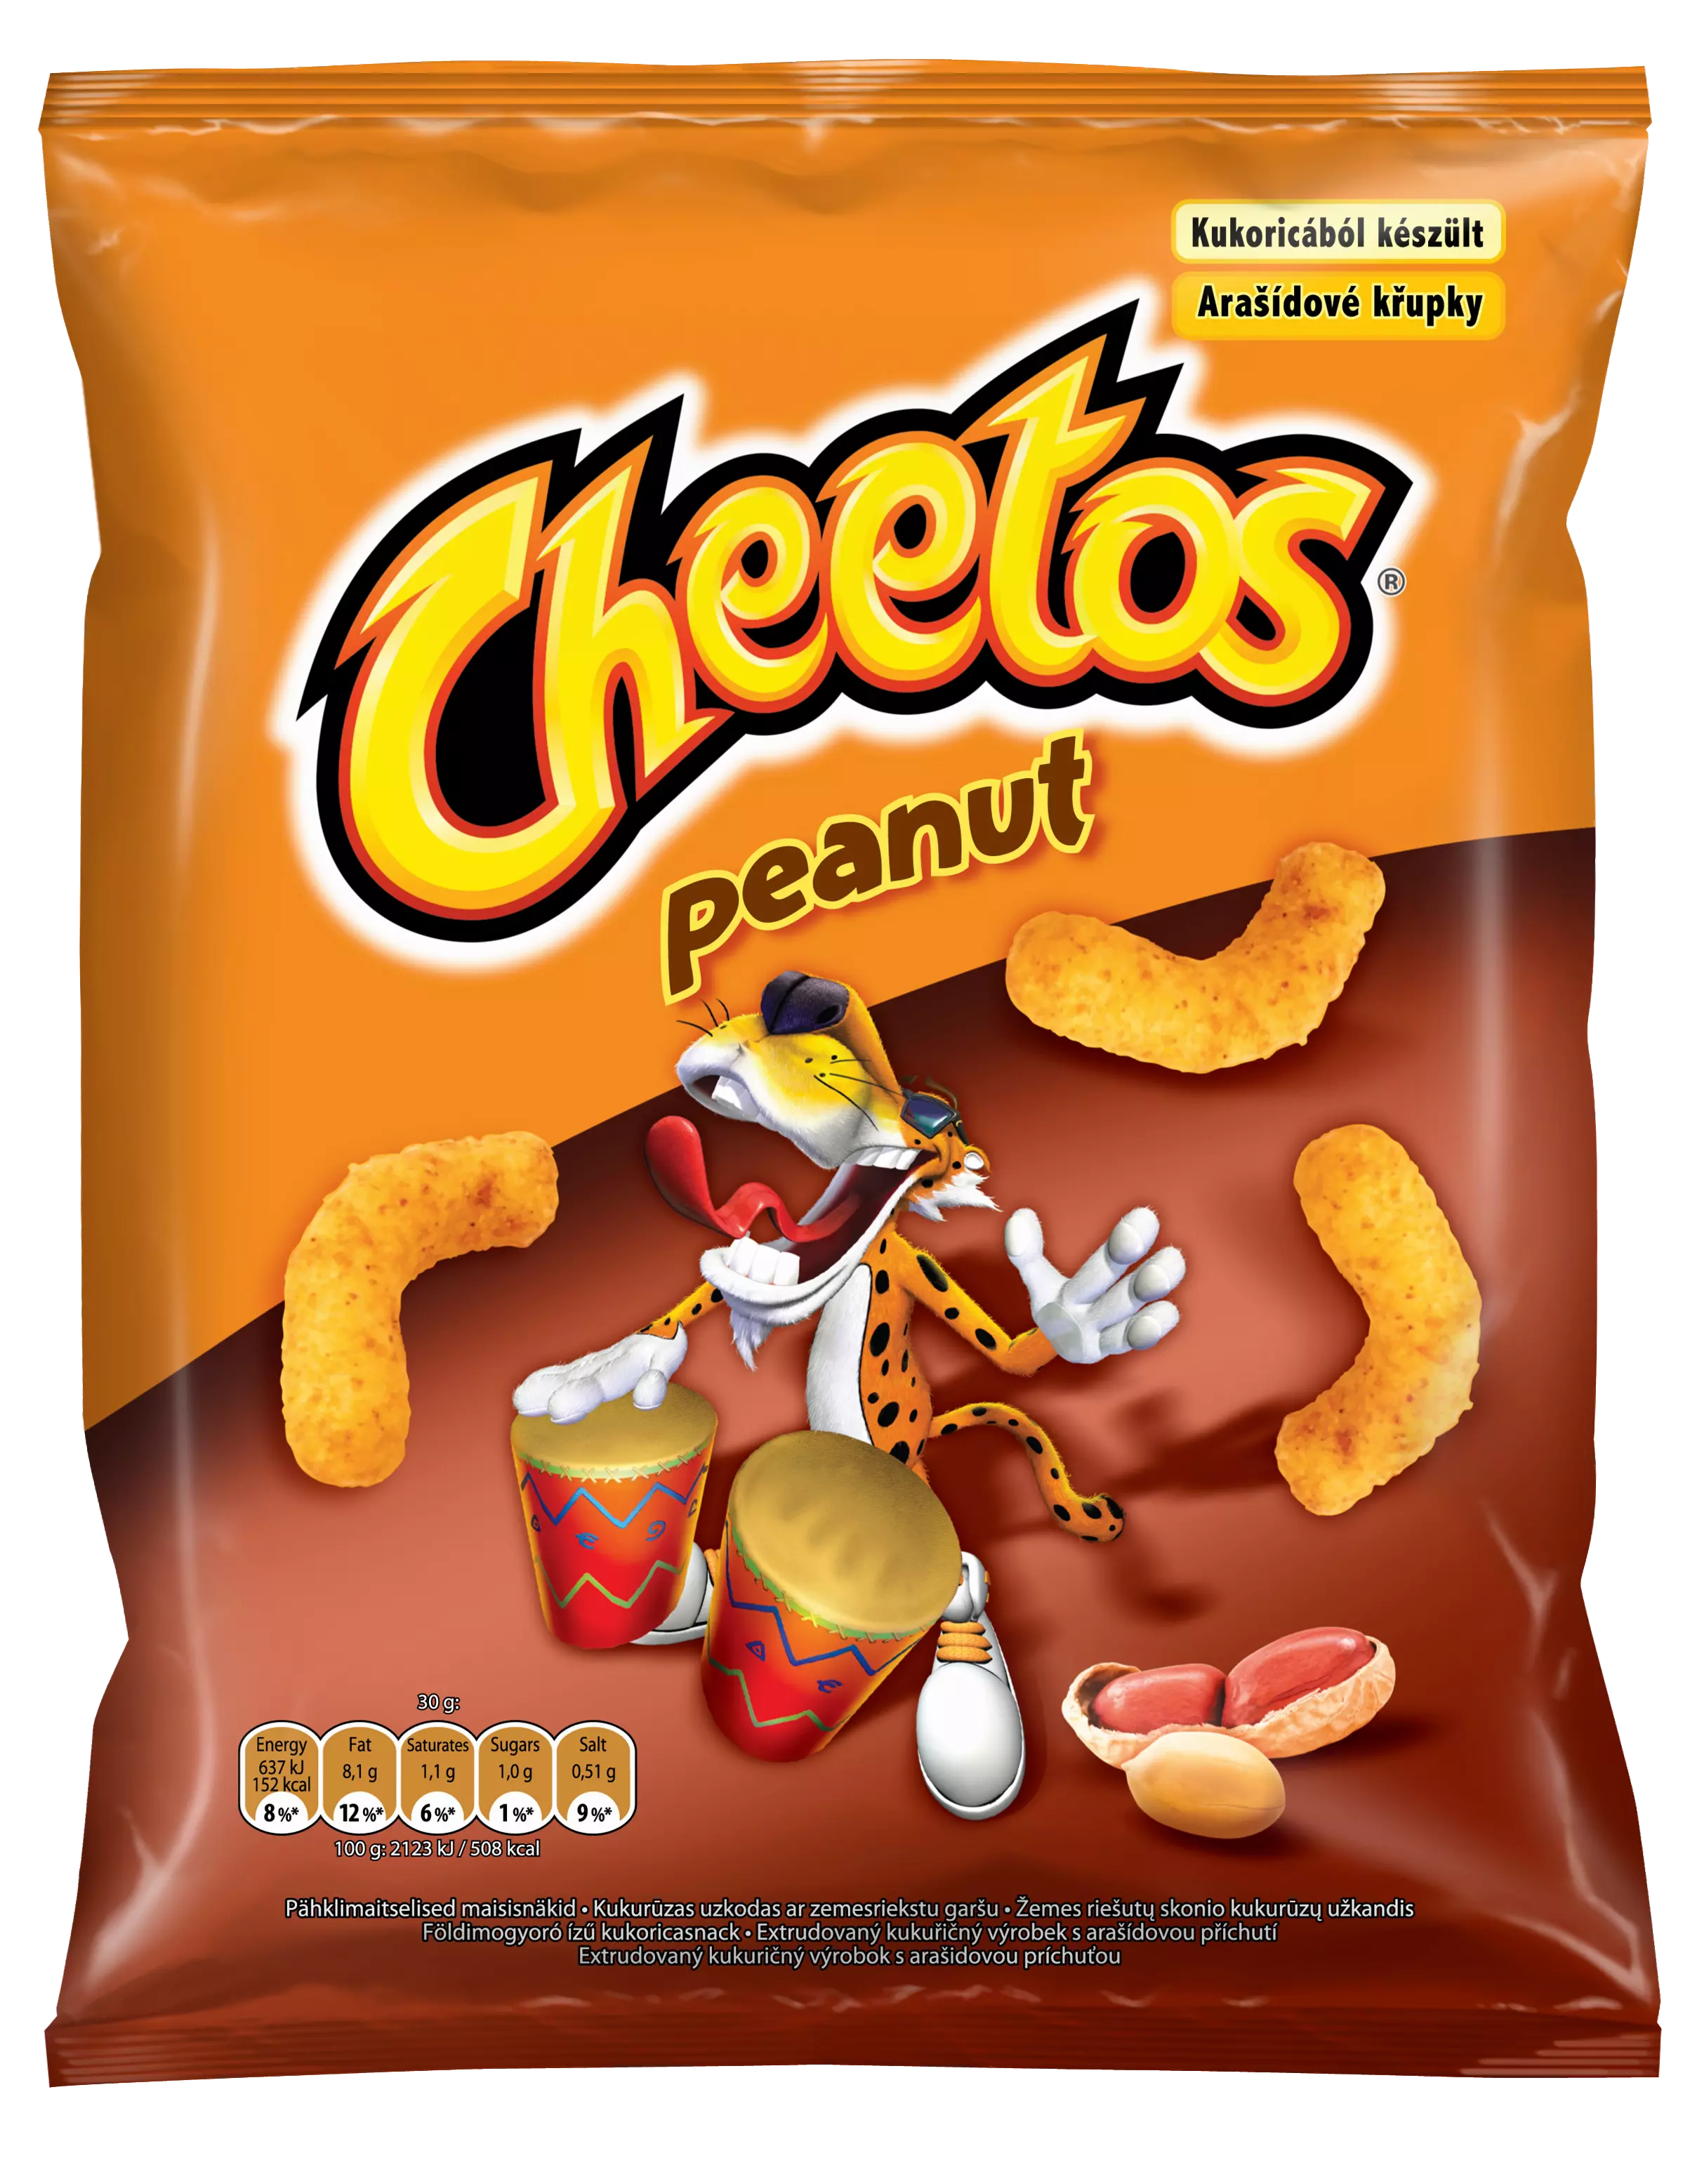 .Cheetos 43g Mogyorós